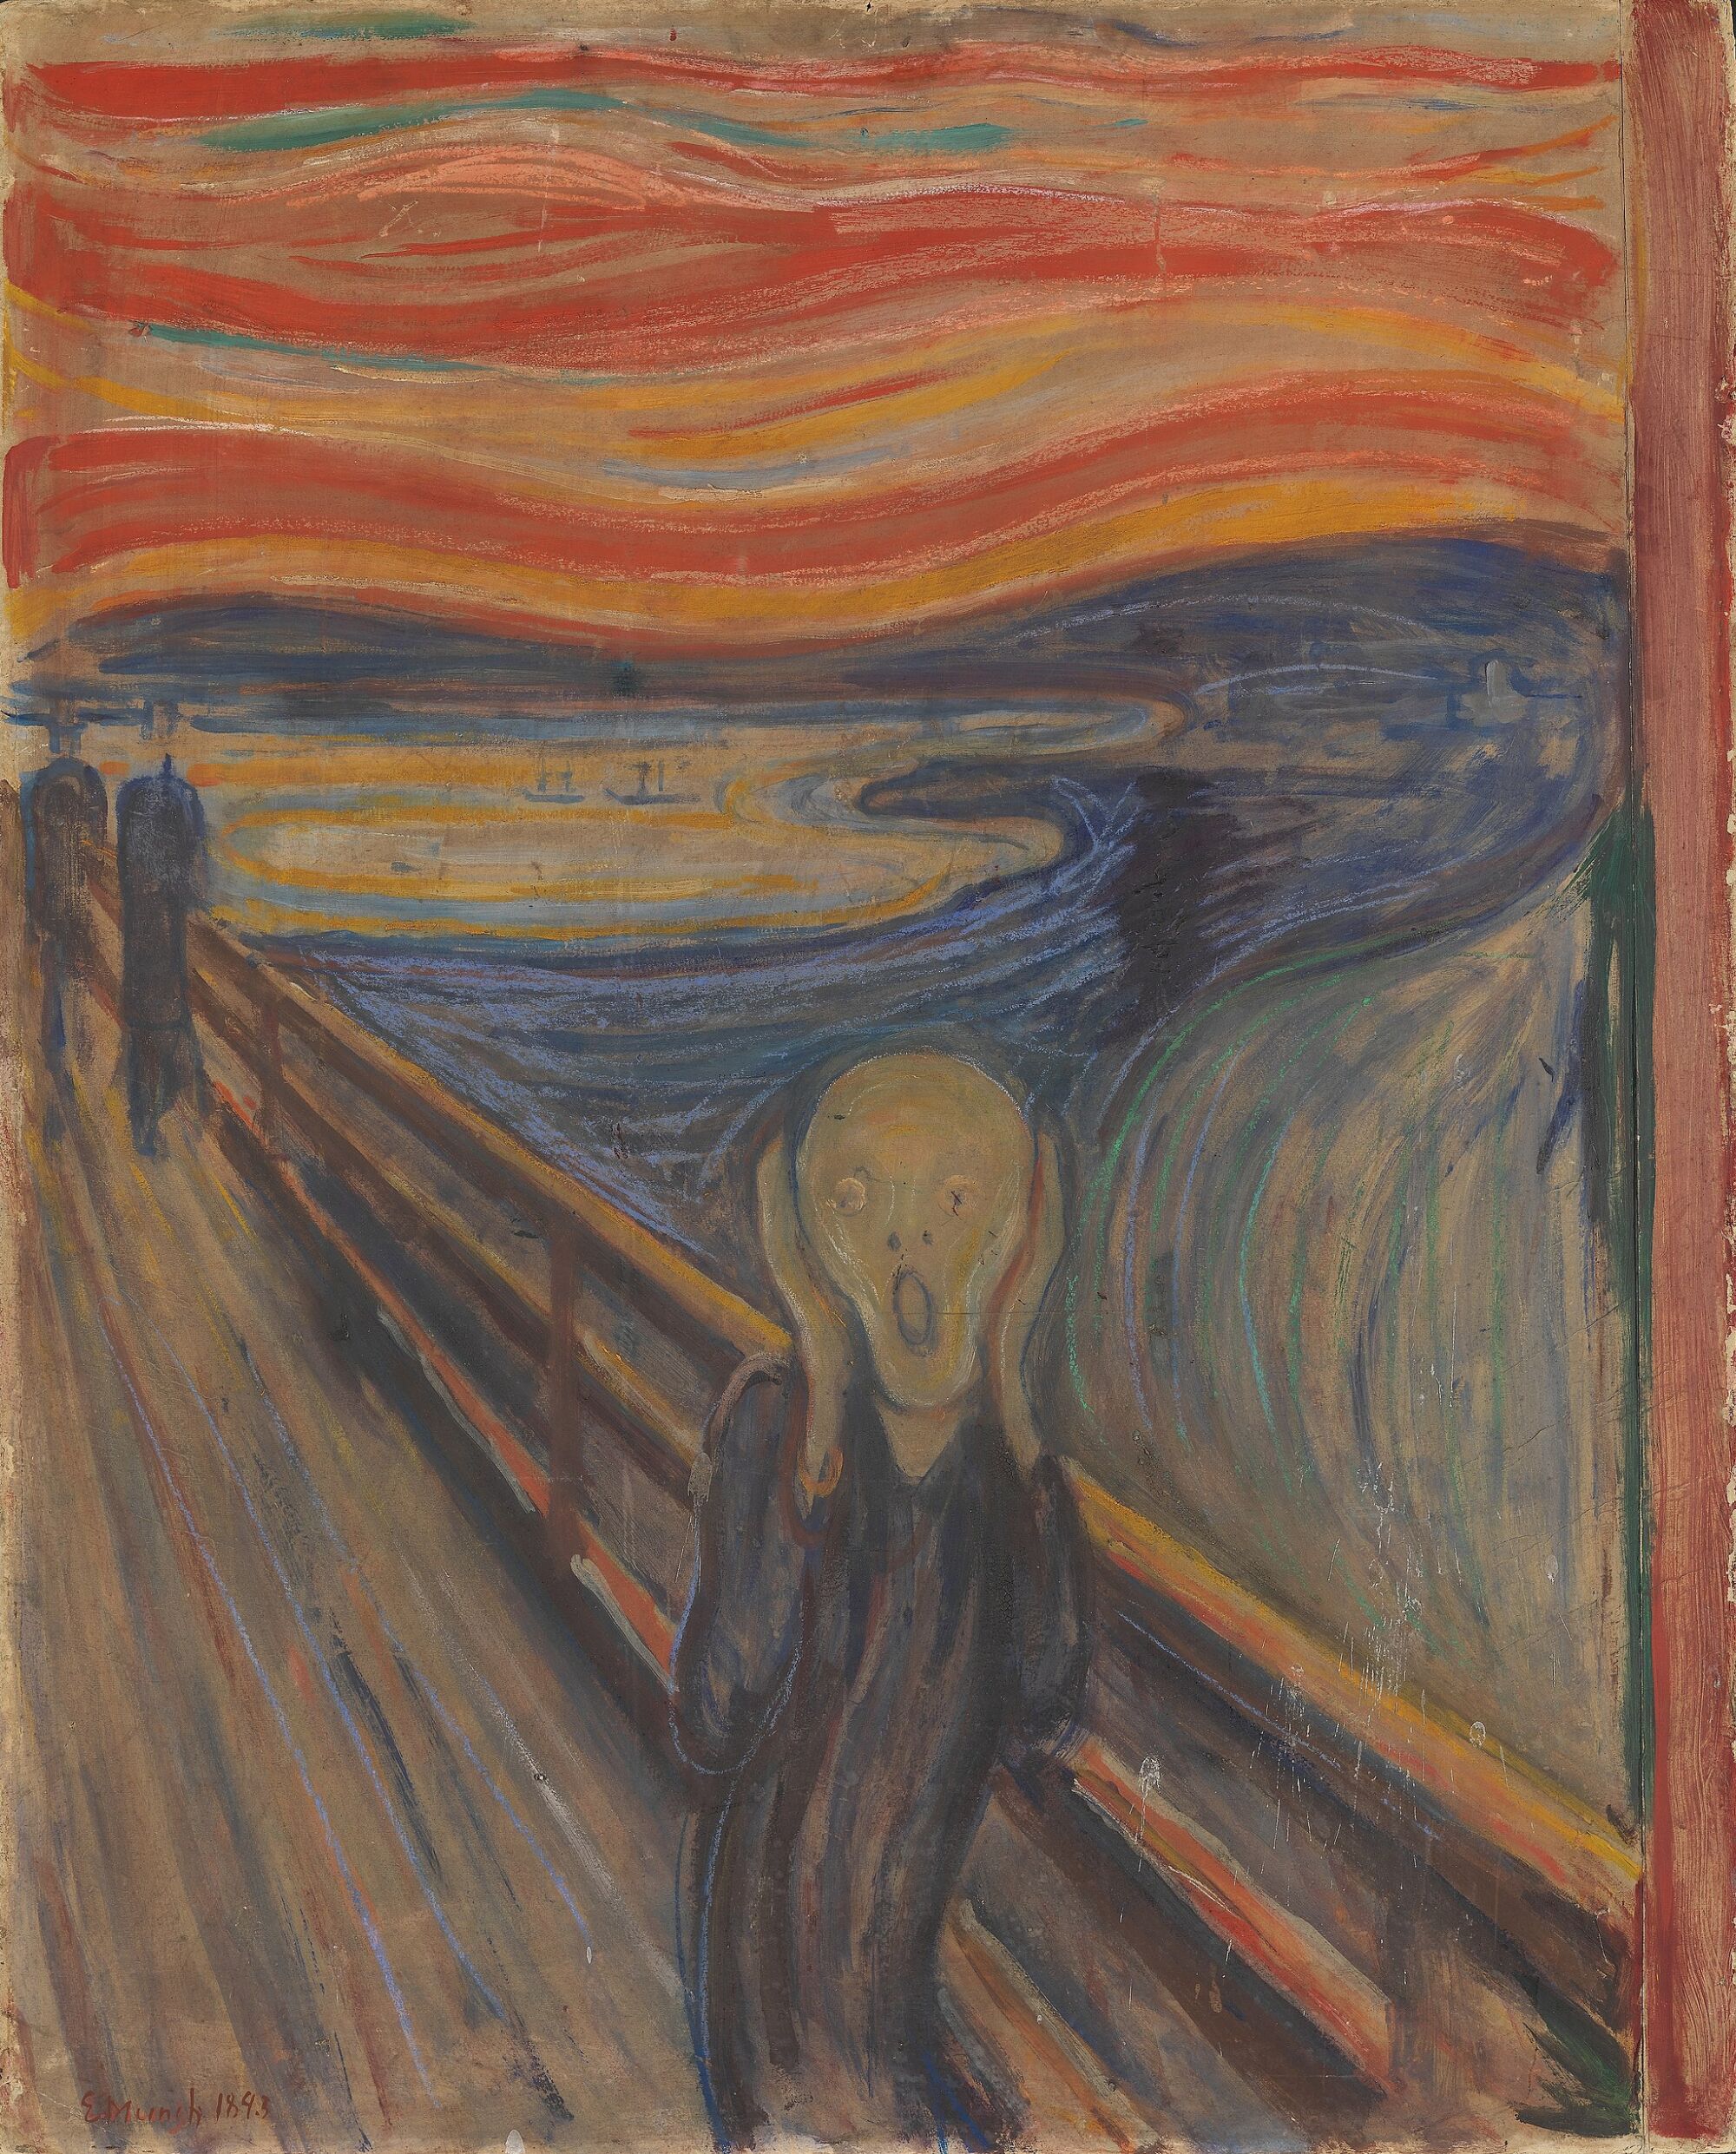 The Wick - Edvard Munch's The Scream, 1893